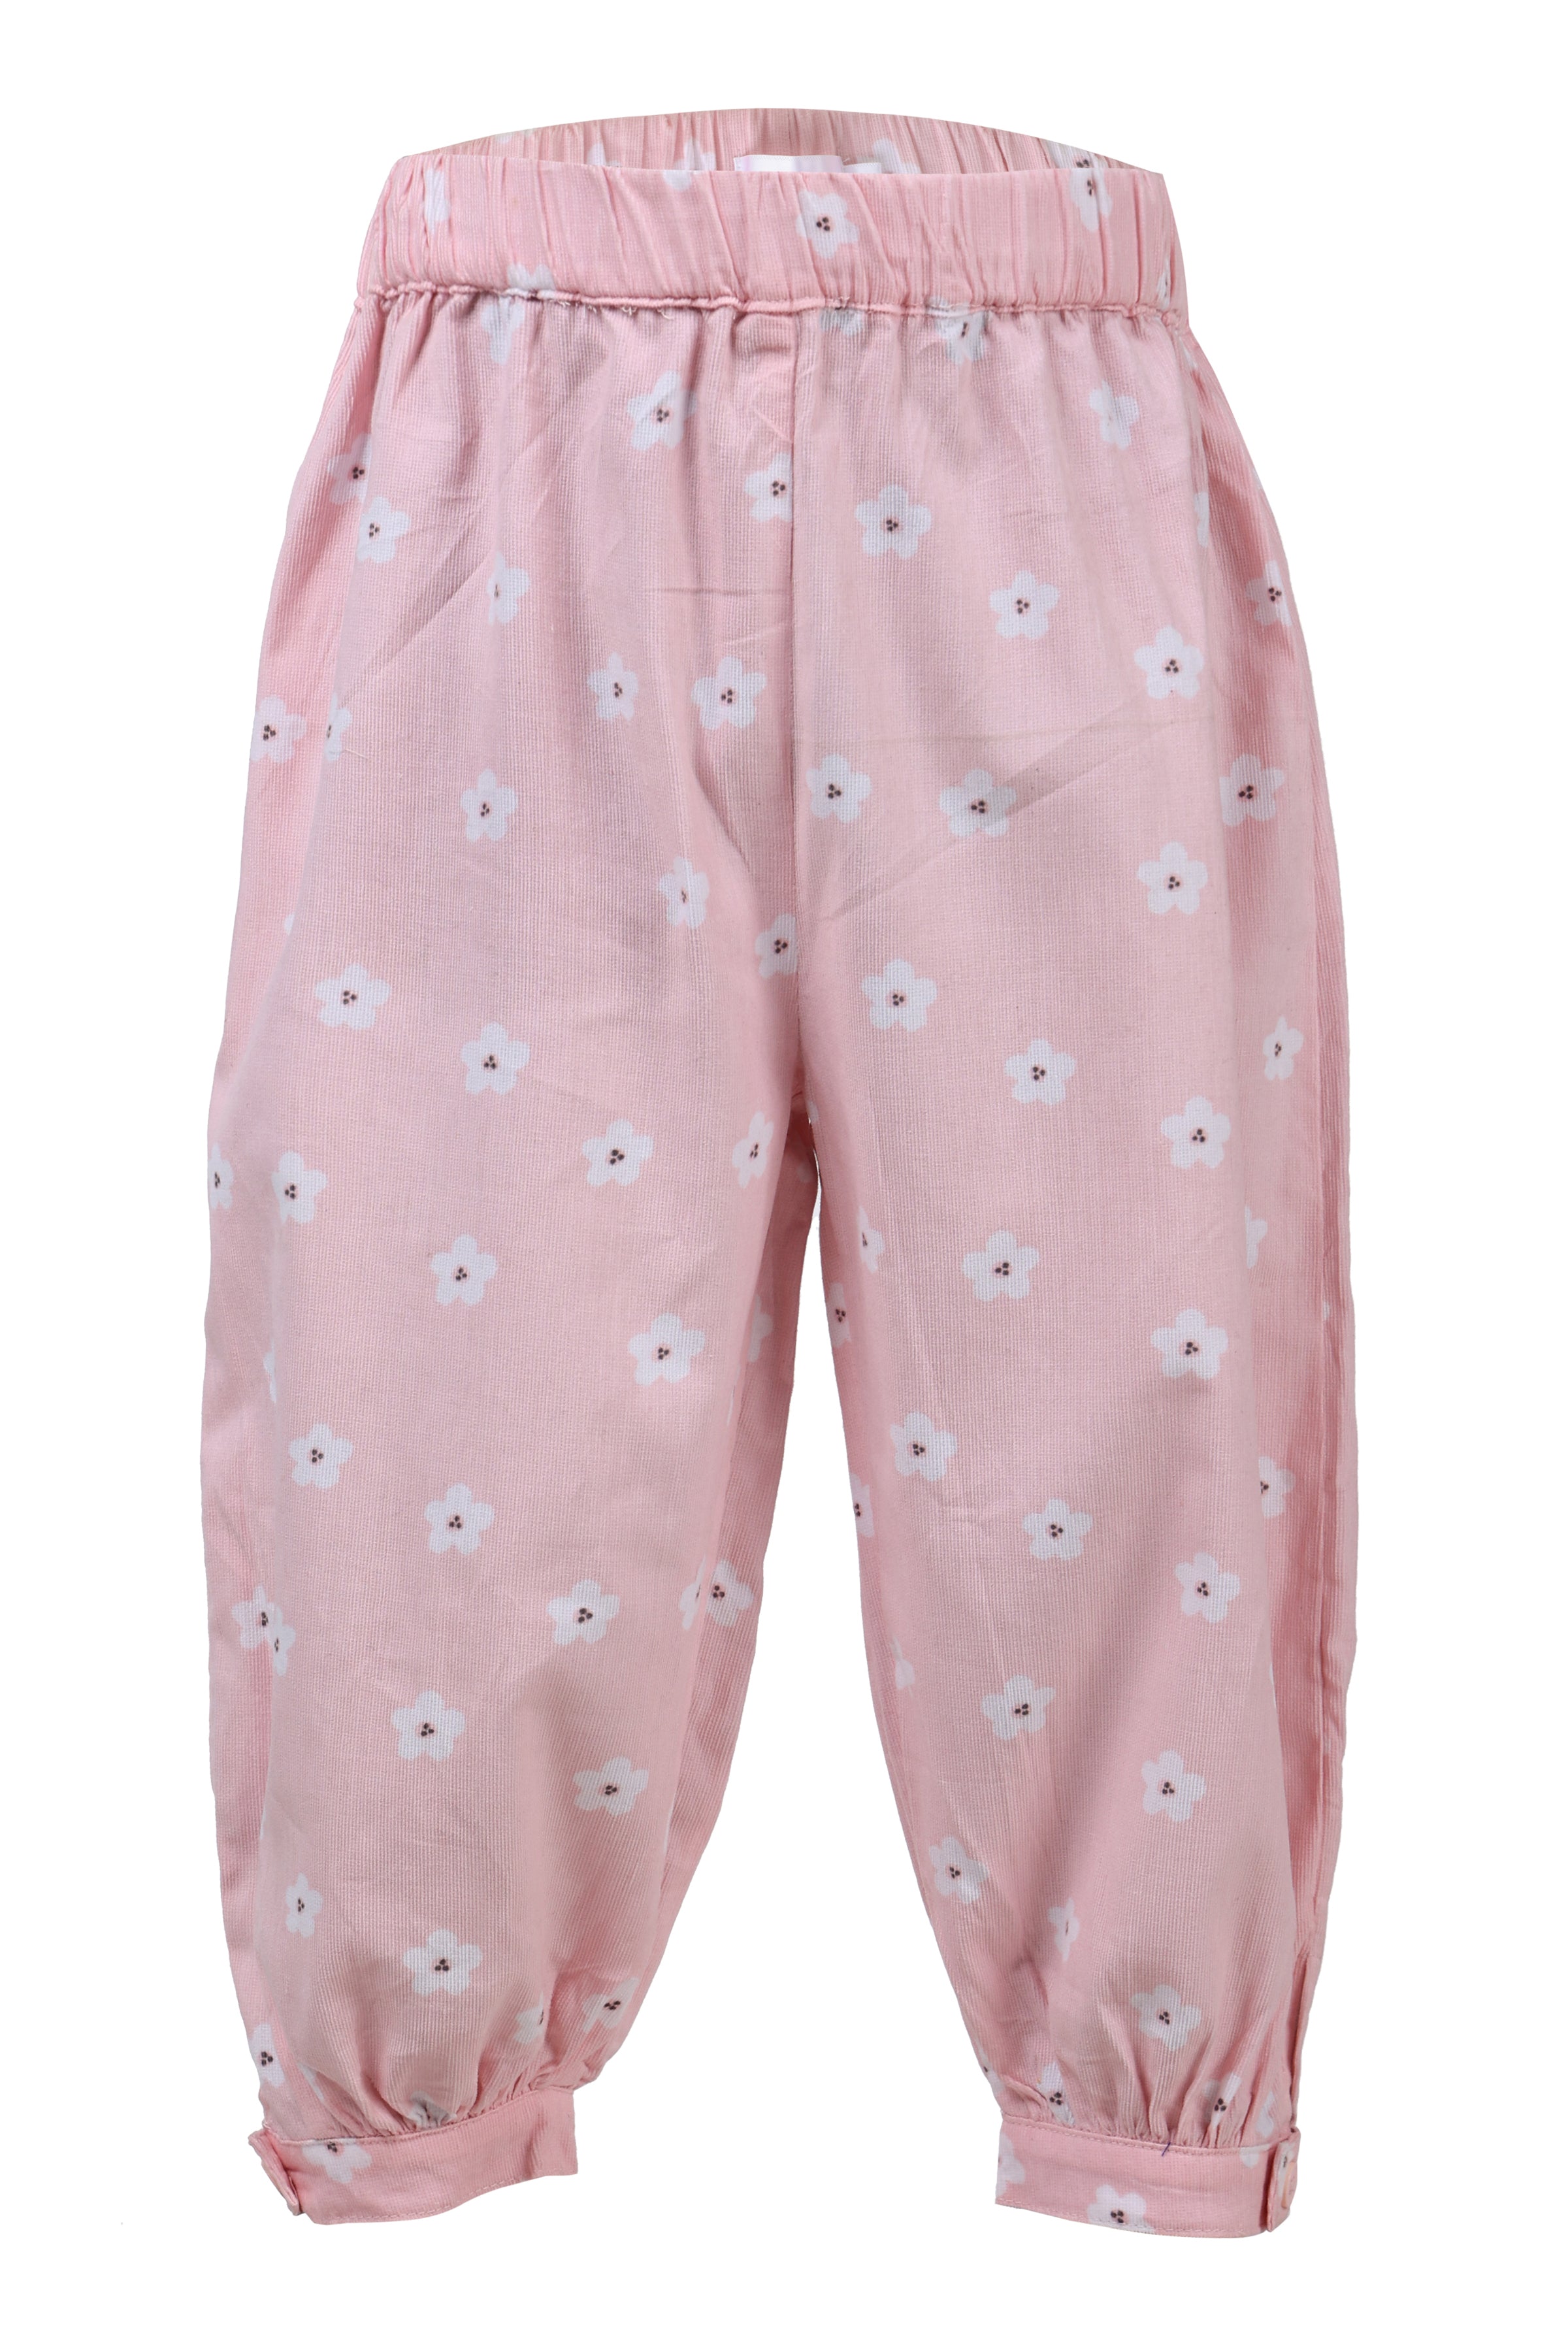 Kiddopanti Kids Pink Printed Harem Pants